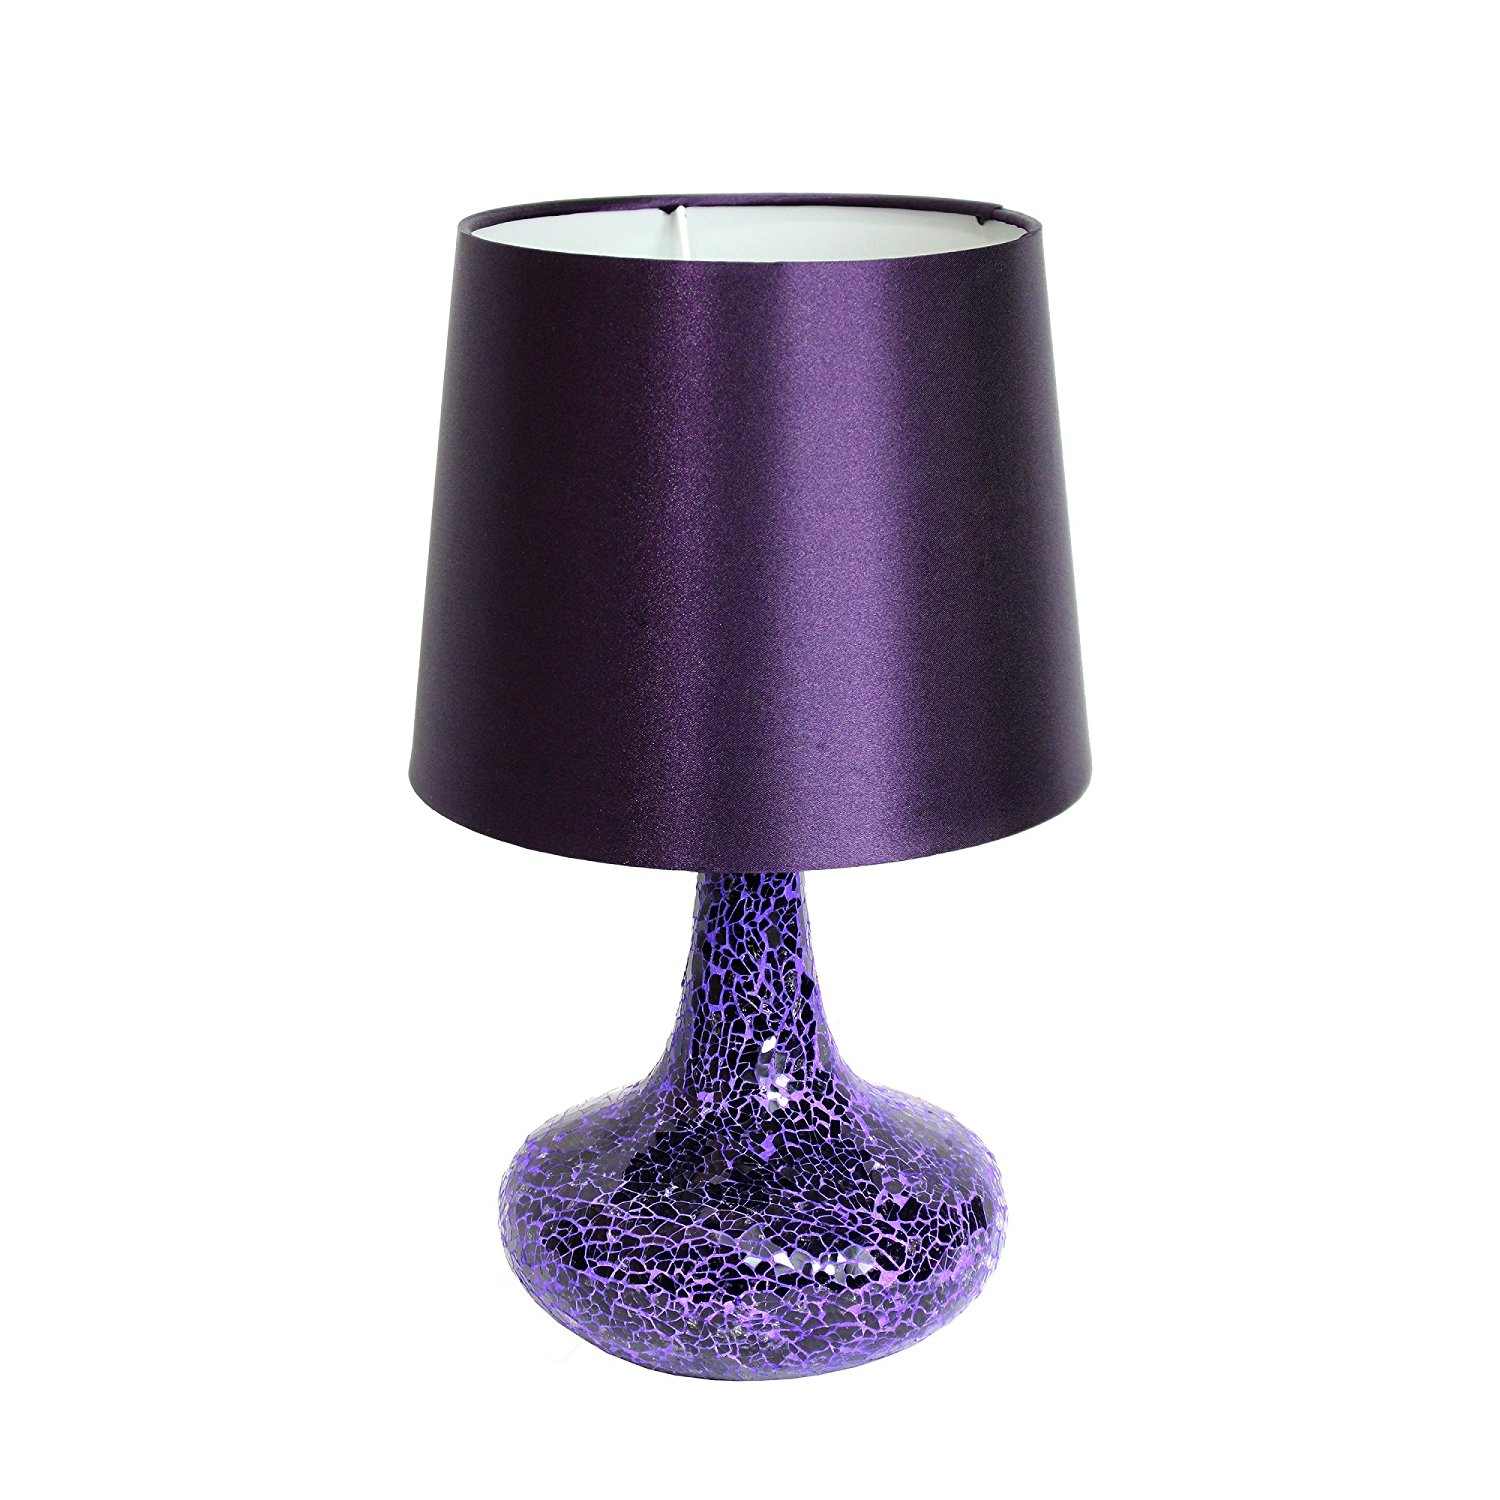 Purple glass lamps - 25 tips for choosing - Warisan Lighting